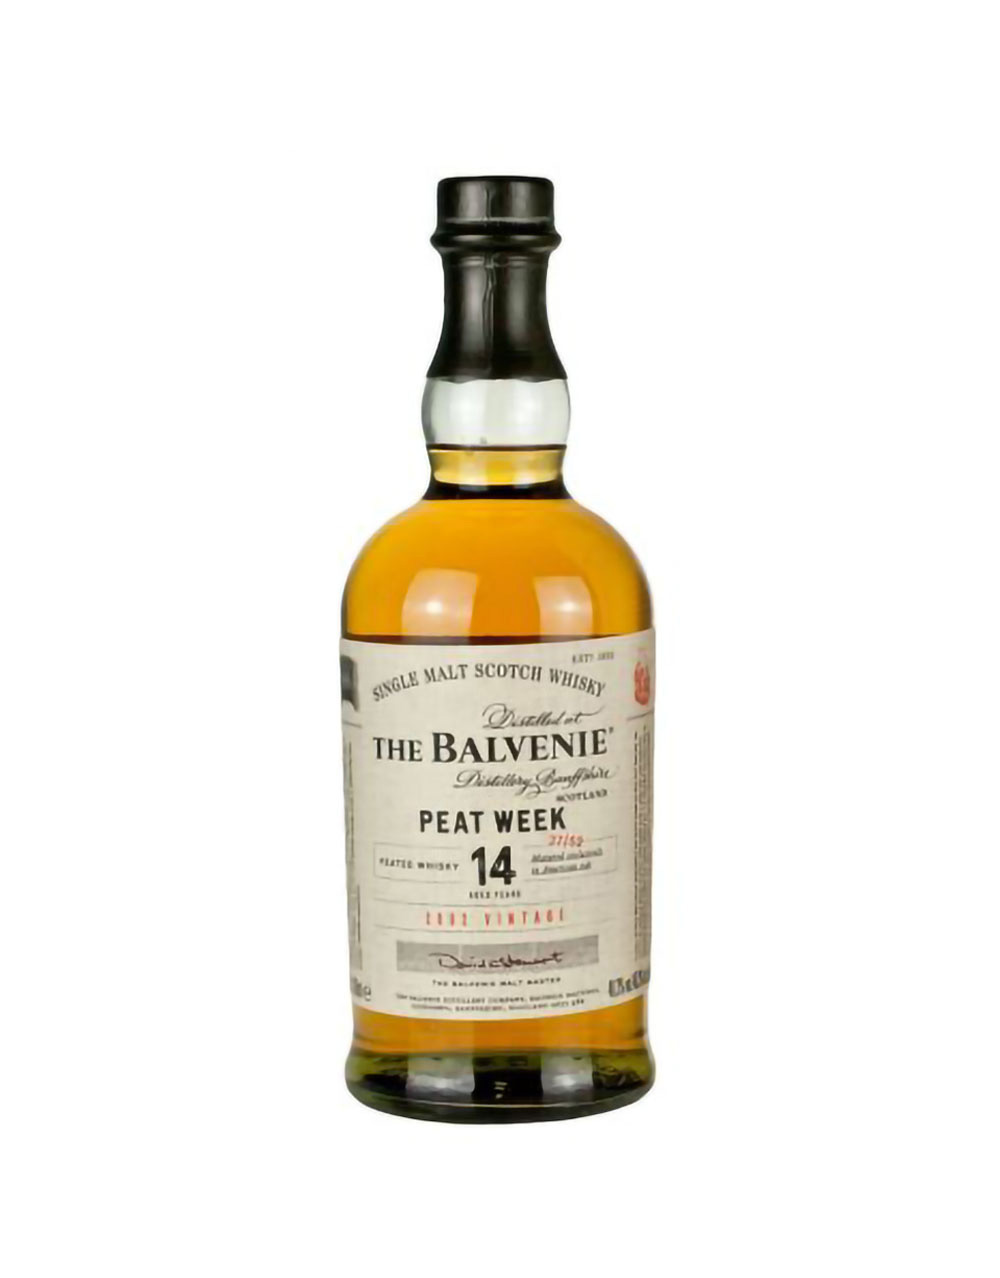 The Balvenie 14 Year Old Peat Week Single Malt Scotch Whisky 2002